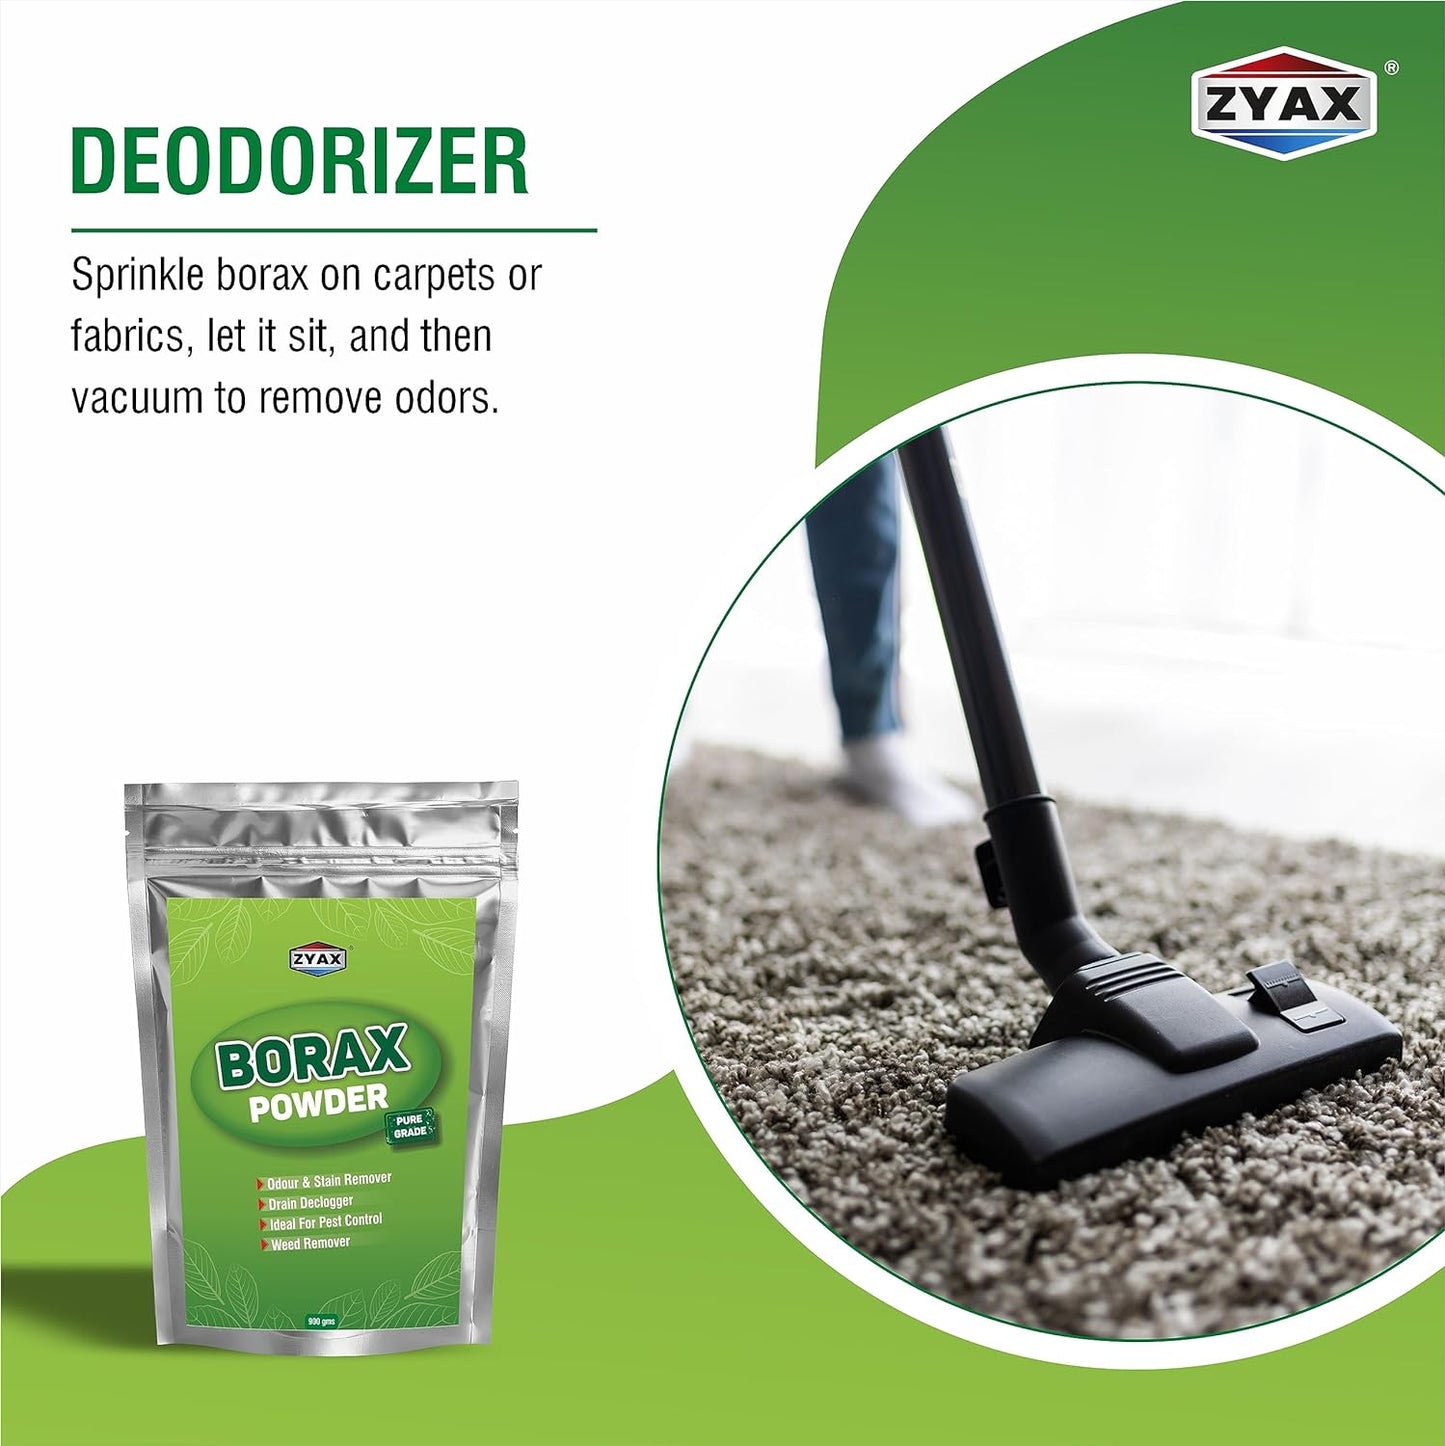 ZYAX Borax Powder